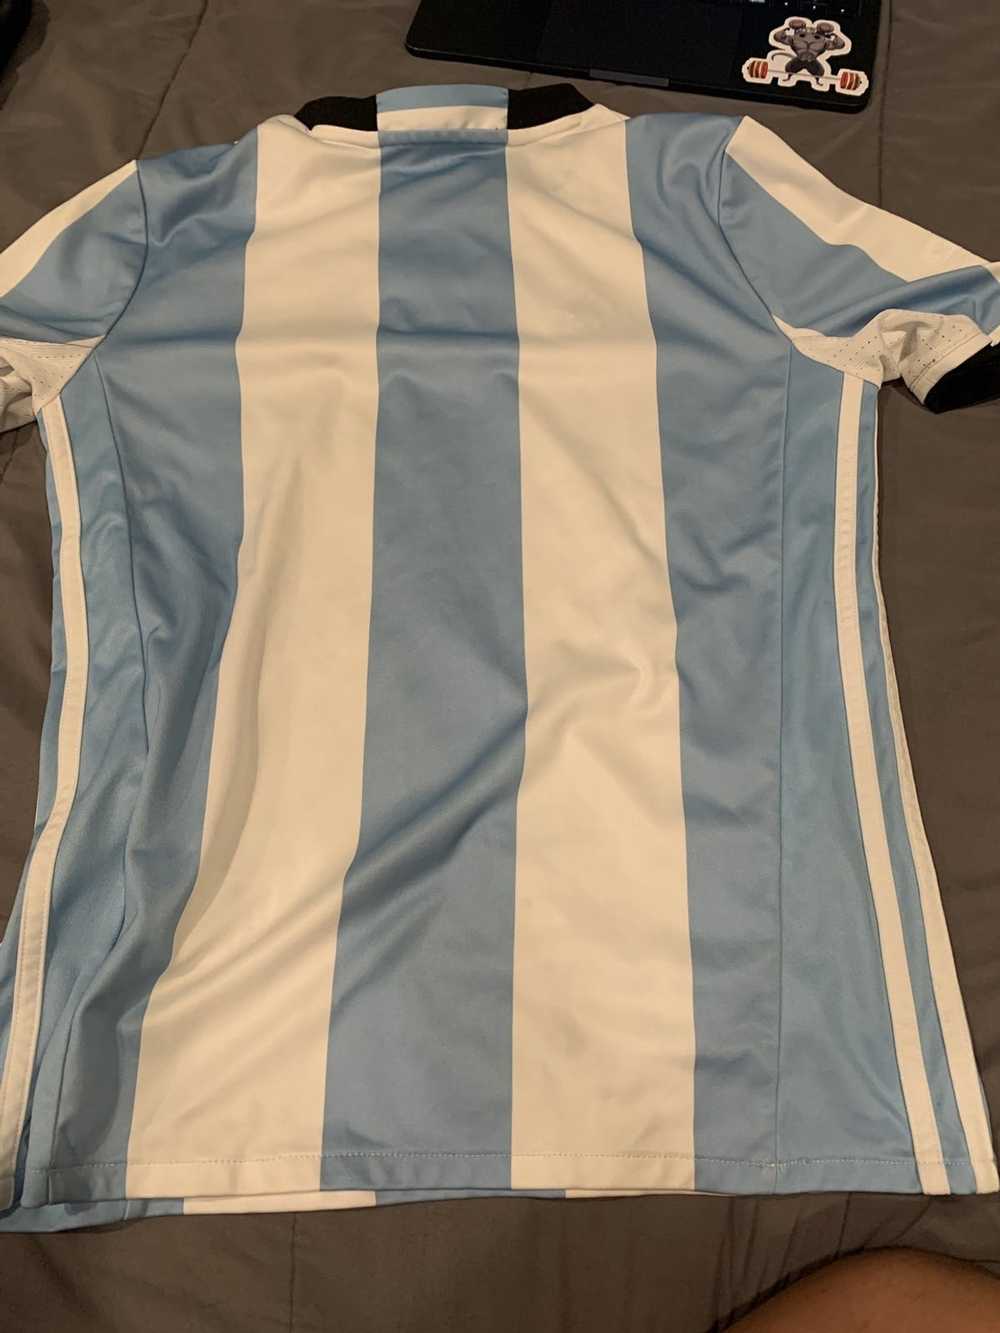 Adidas Argentina Soccer/Football Jersey - image 2